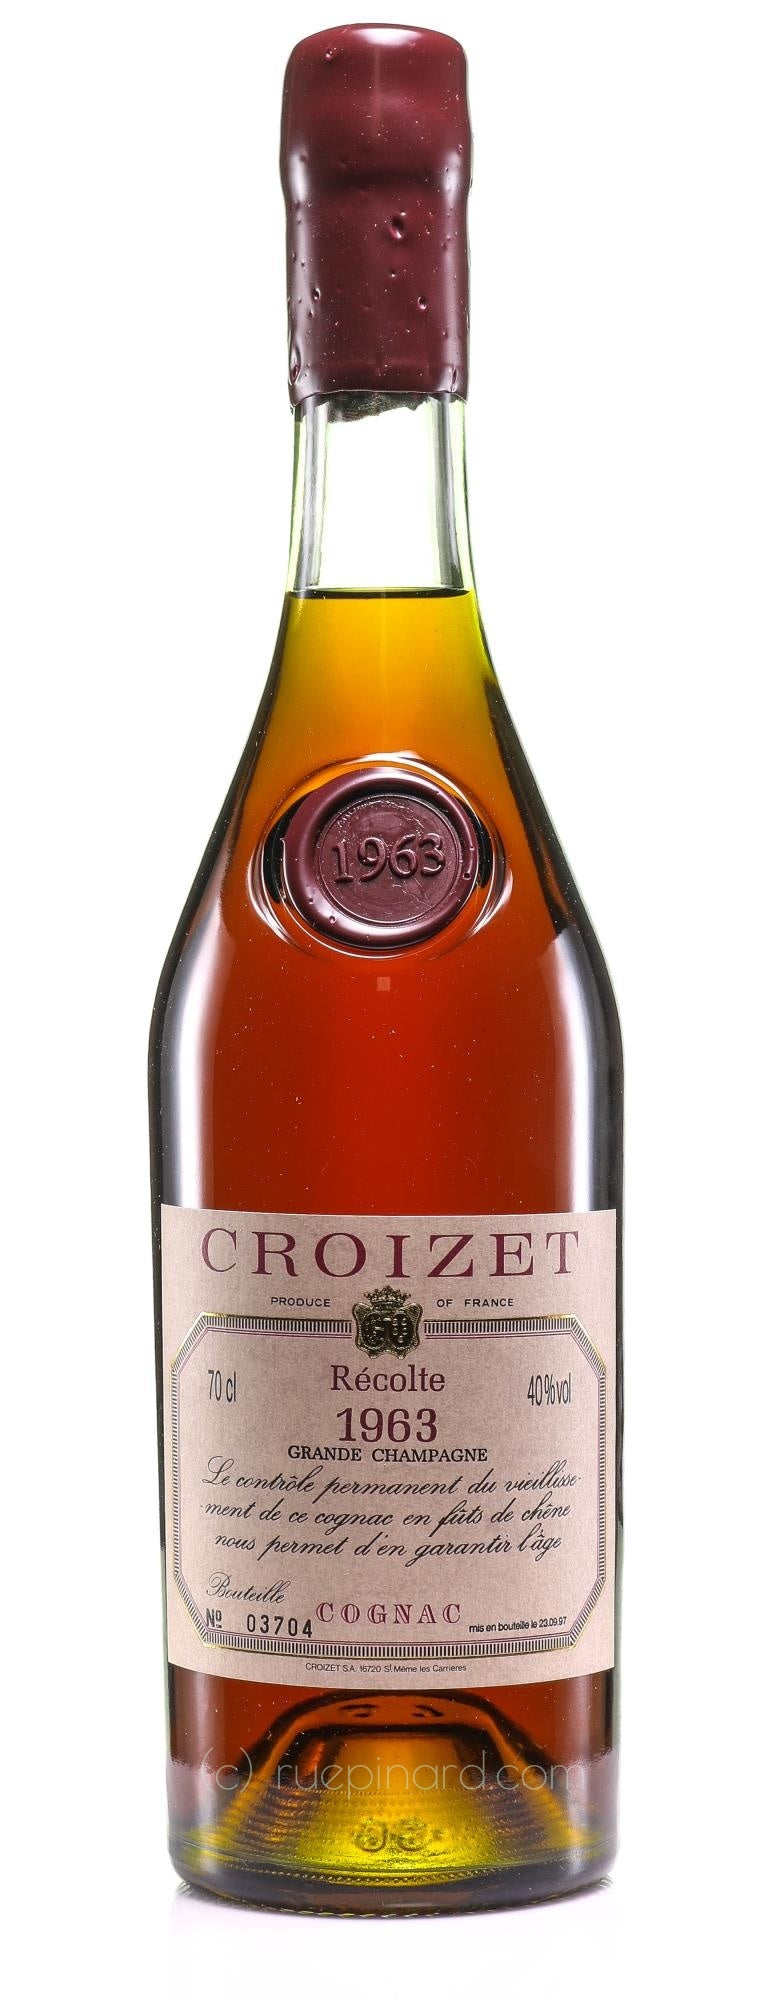 1963 Croizet B. Léon Cognac, Grande Champagne - Rue Pinard